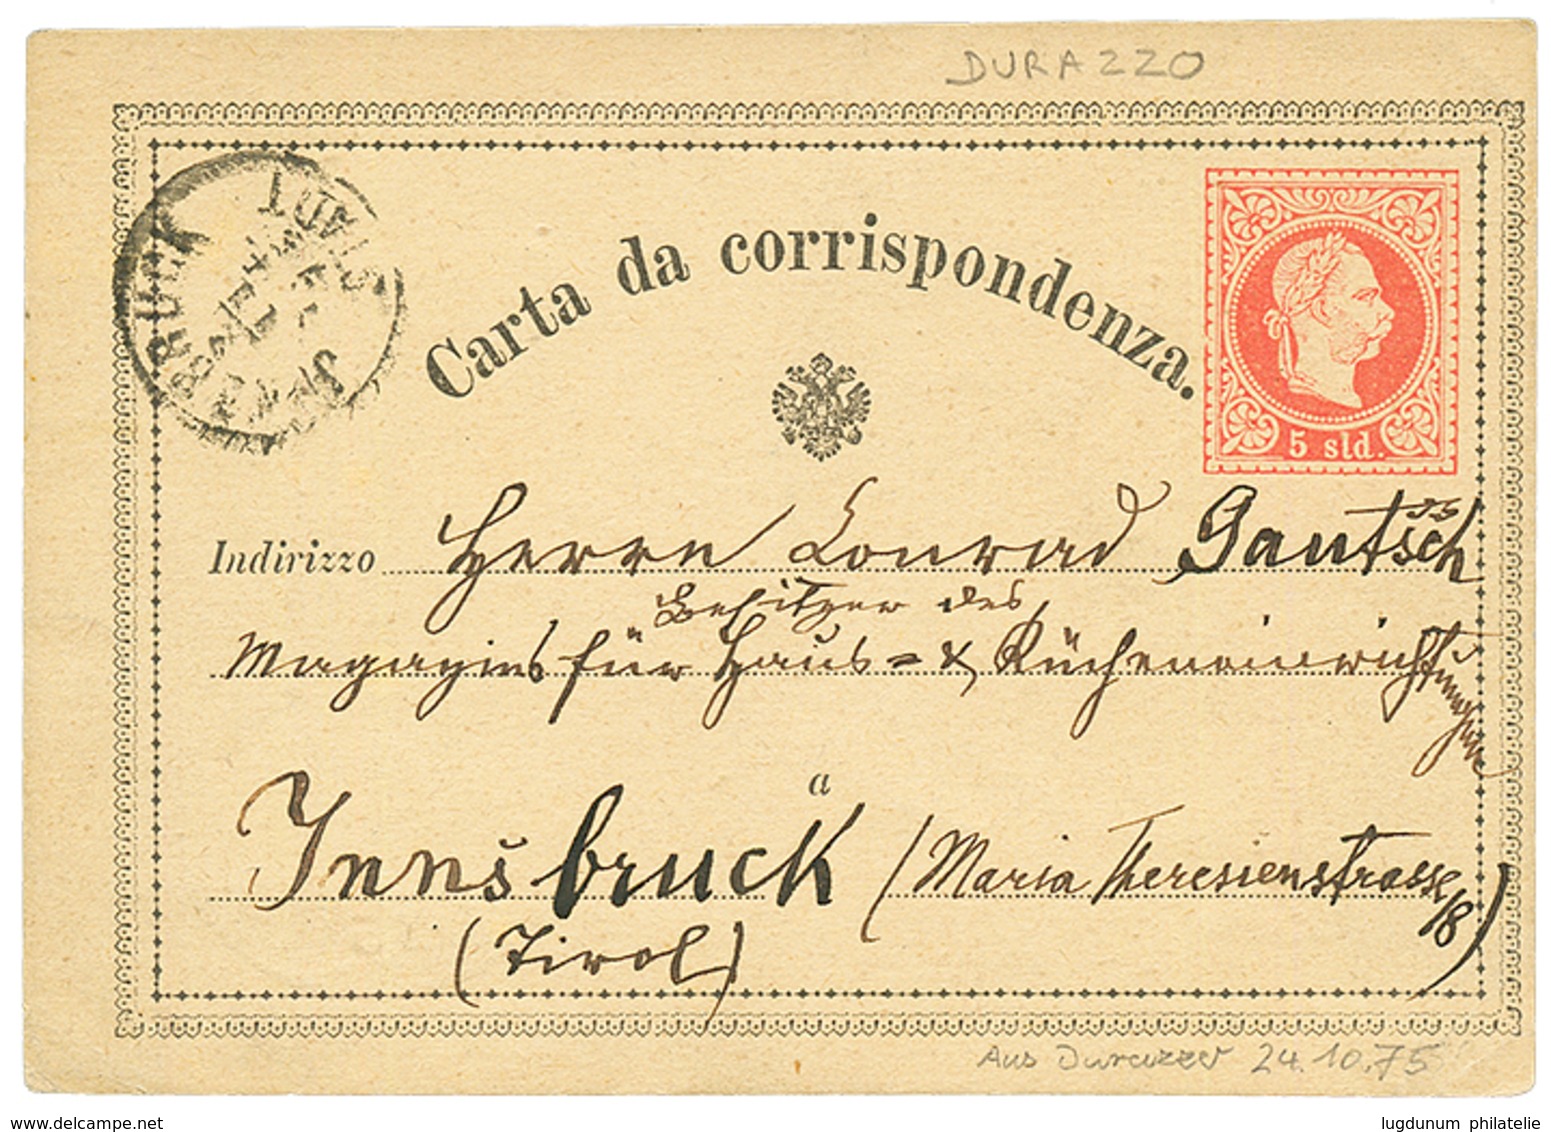 DURAZZO : 1875 P./Stat 5s Datelined "DURAZZO ALBANIEN" Via TRIESTE To INNSBRUCK (Tirol). Scarce. Vf. - Eastern Austria